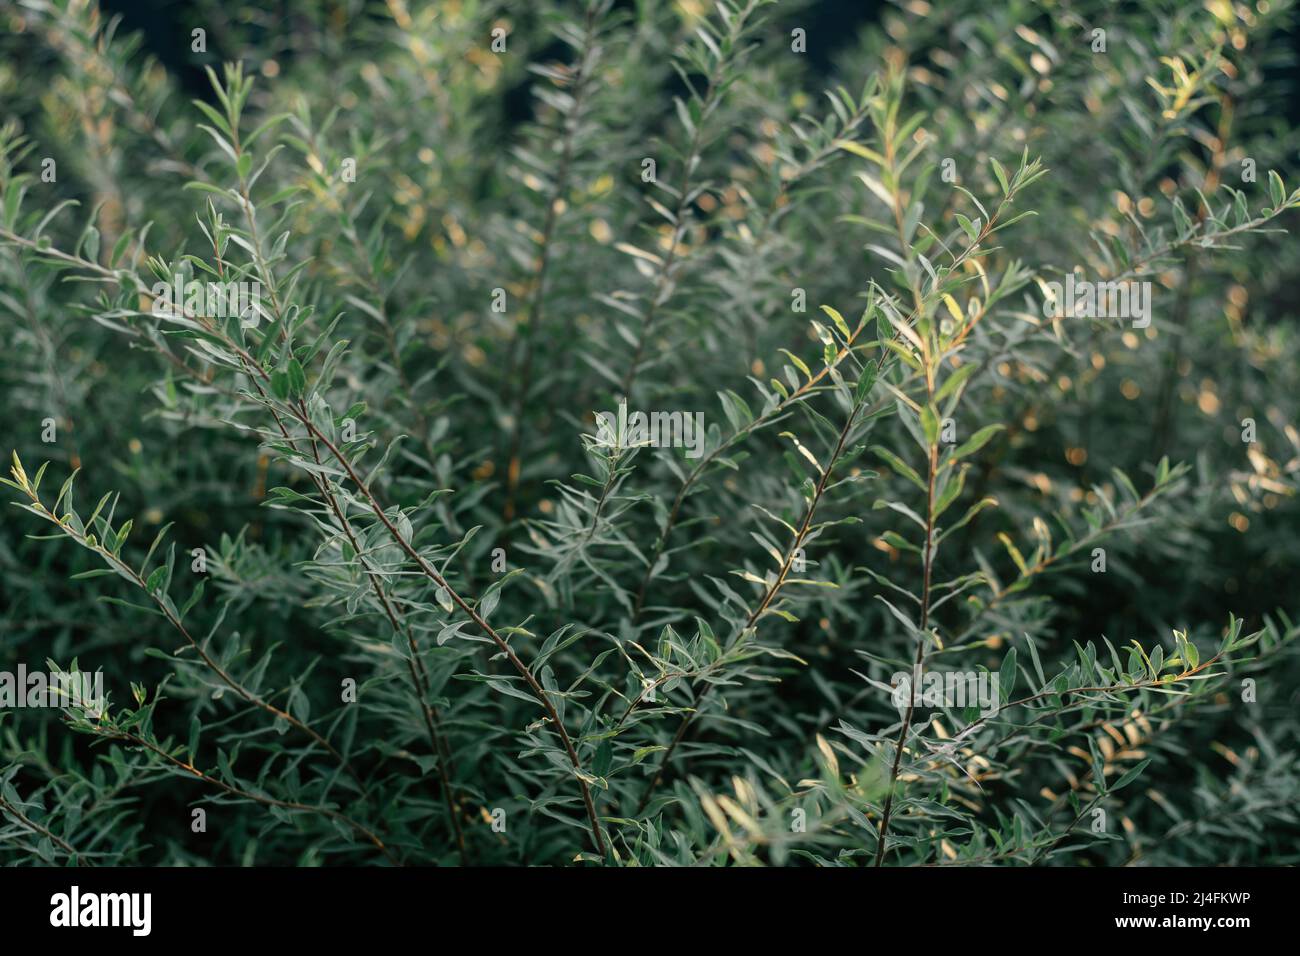 Spirea plant, evergreen flowering shrub. Thin short green leaves. Background partially blurred image of Spiraea Grefsheim Stock Photo